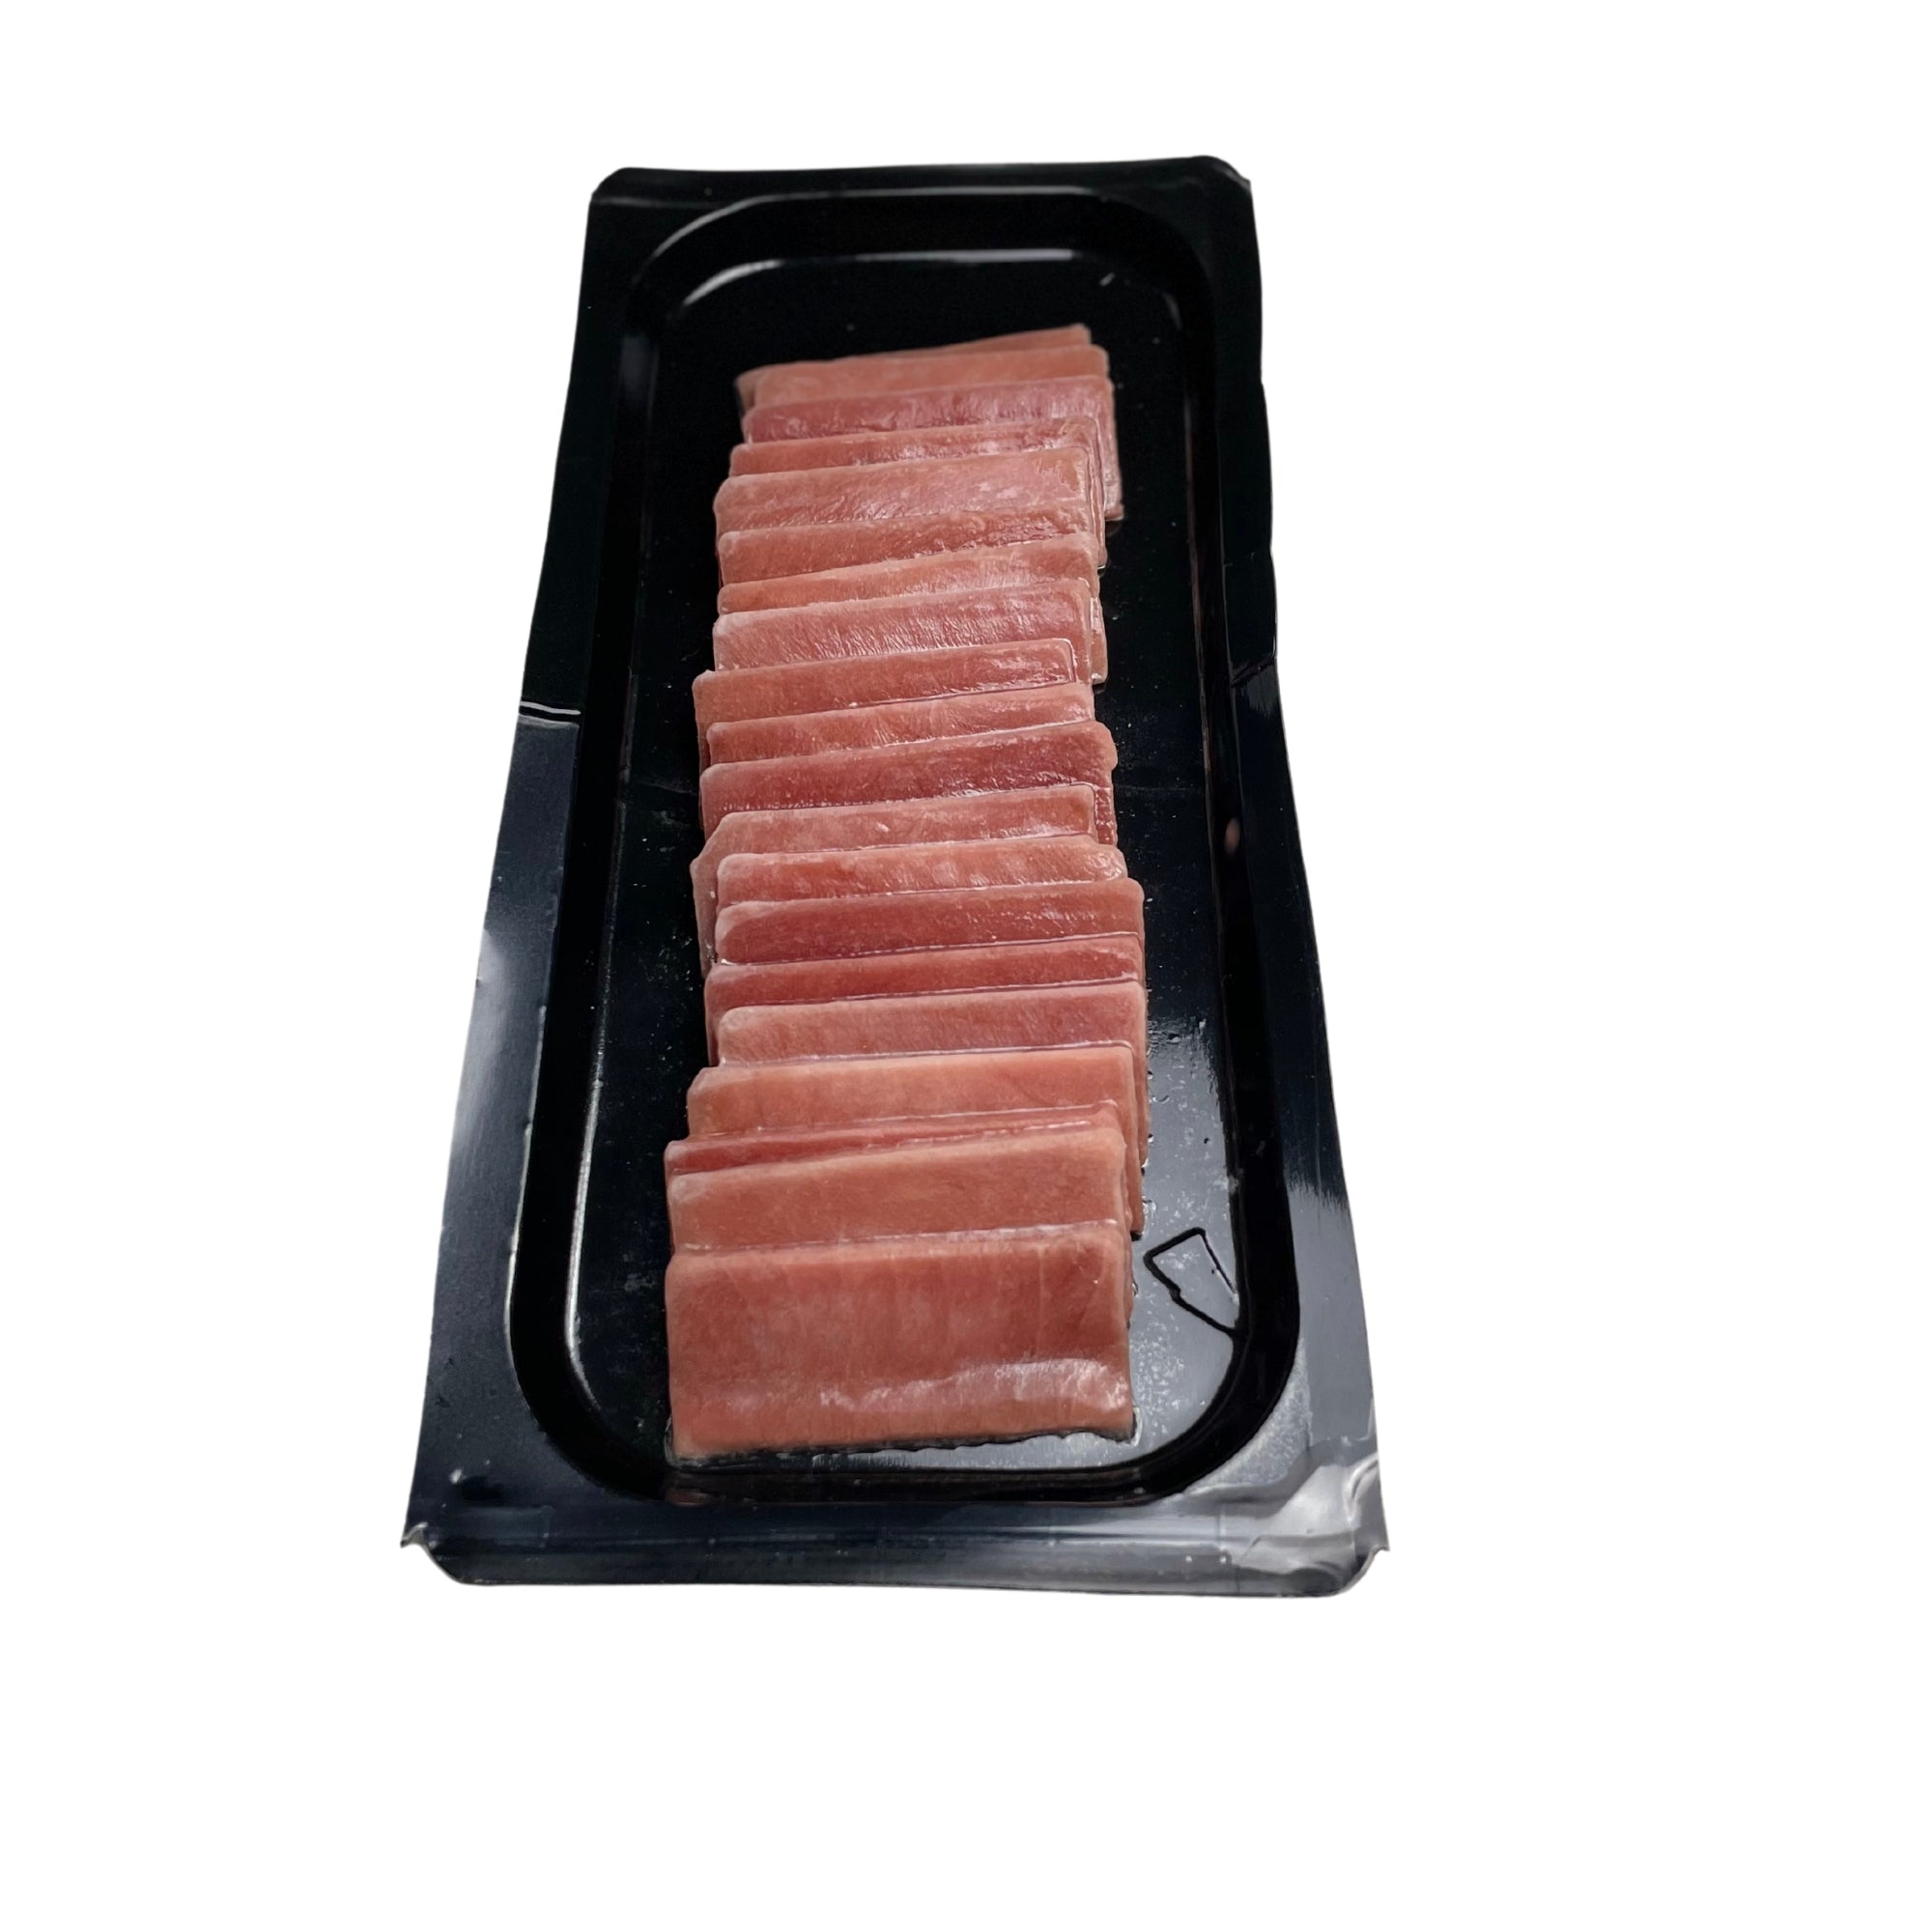 Ahi Tuna Saku Slices, 30 packs x 5.3 oz